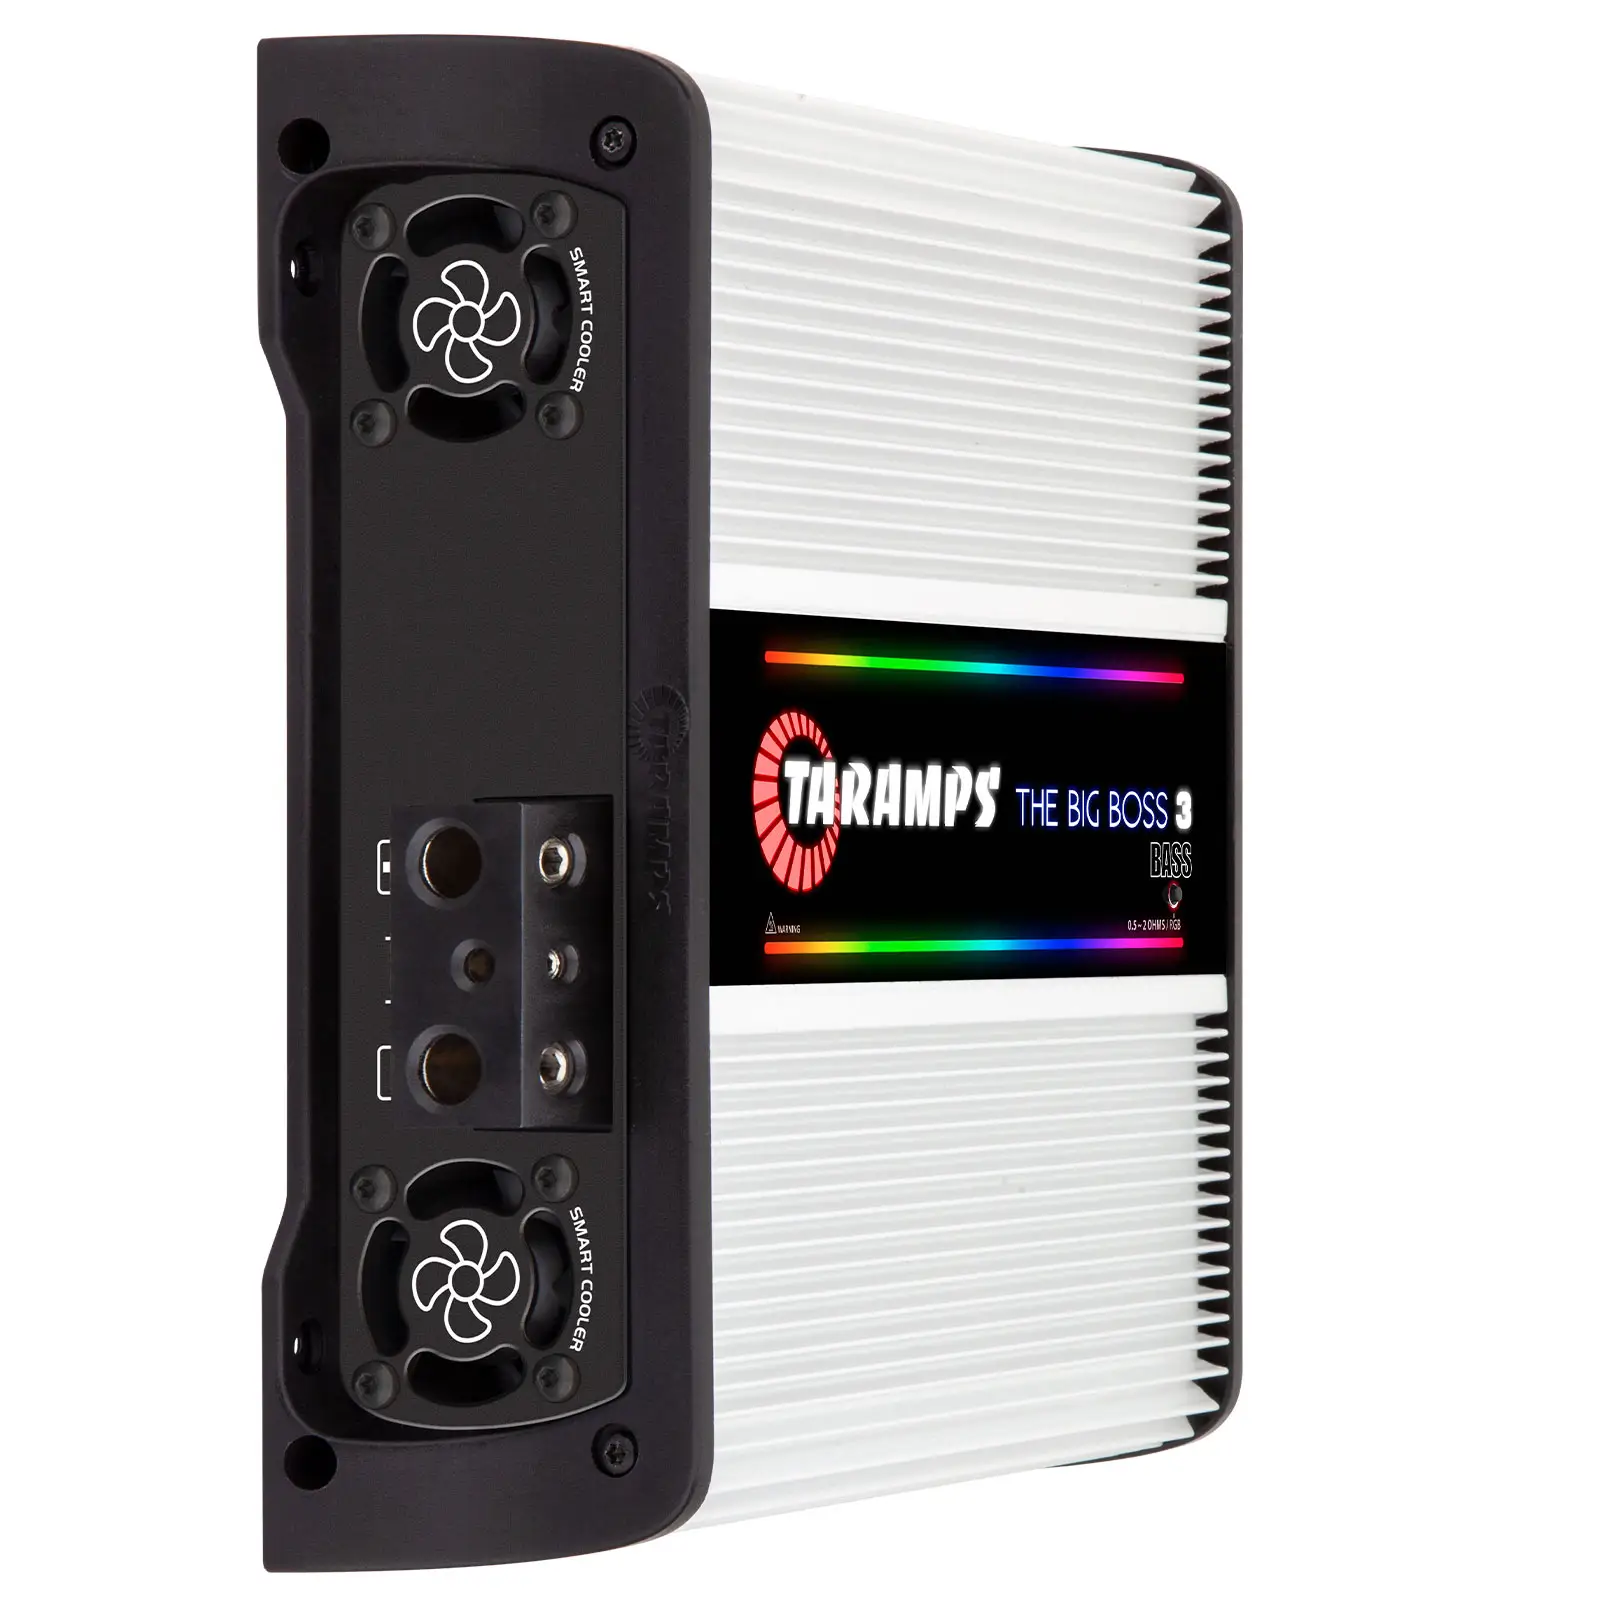 Taramps The Big Boss 3 Bass Amplifier 0.5 to 2 Ohms 3000 Watts RMS 108 RGB Effects Multi Impedance Class D Monoblock Car Audio